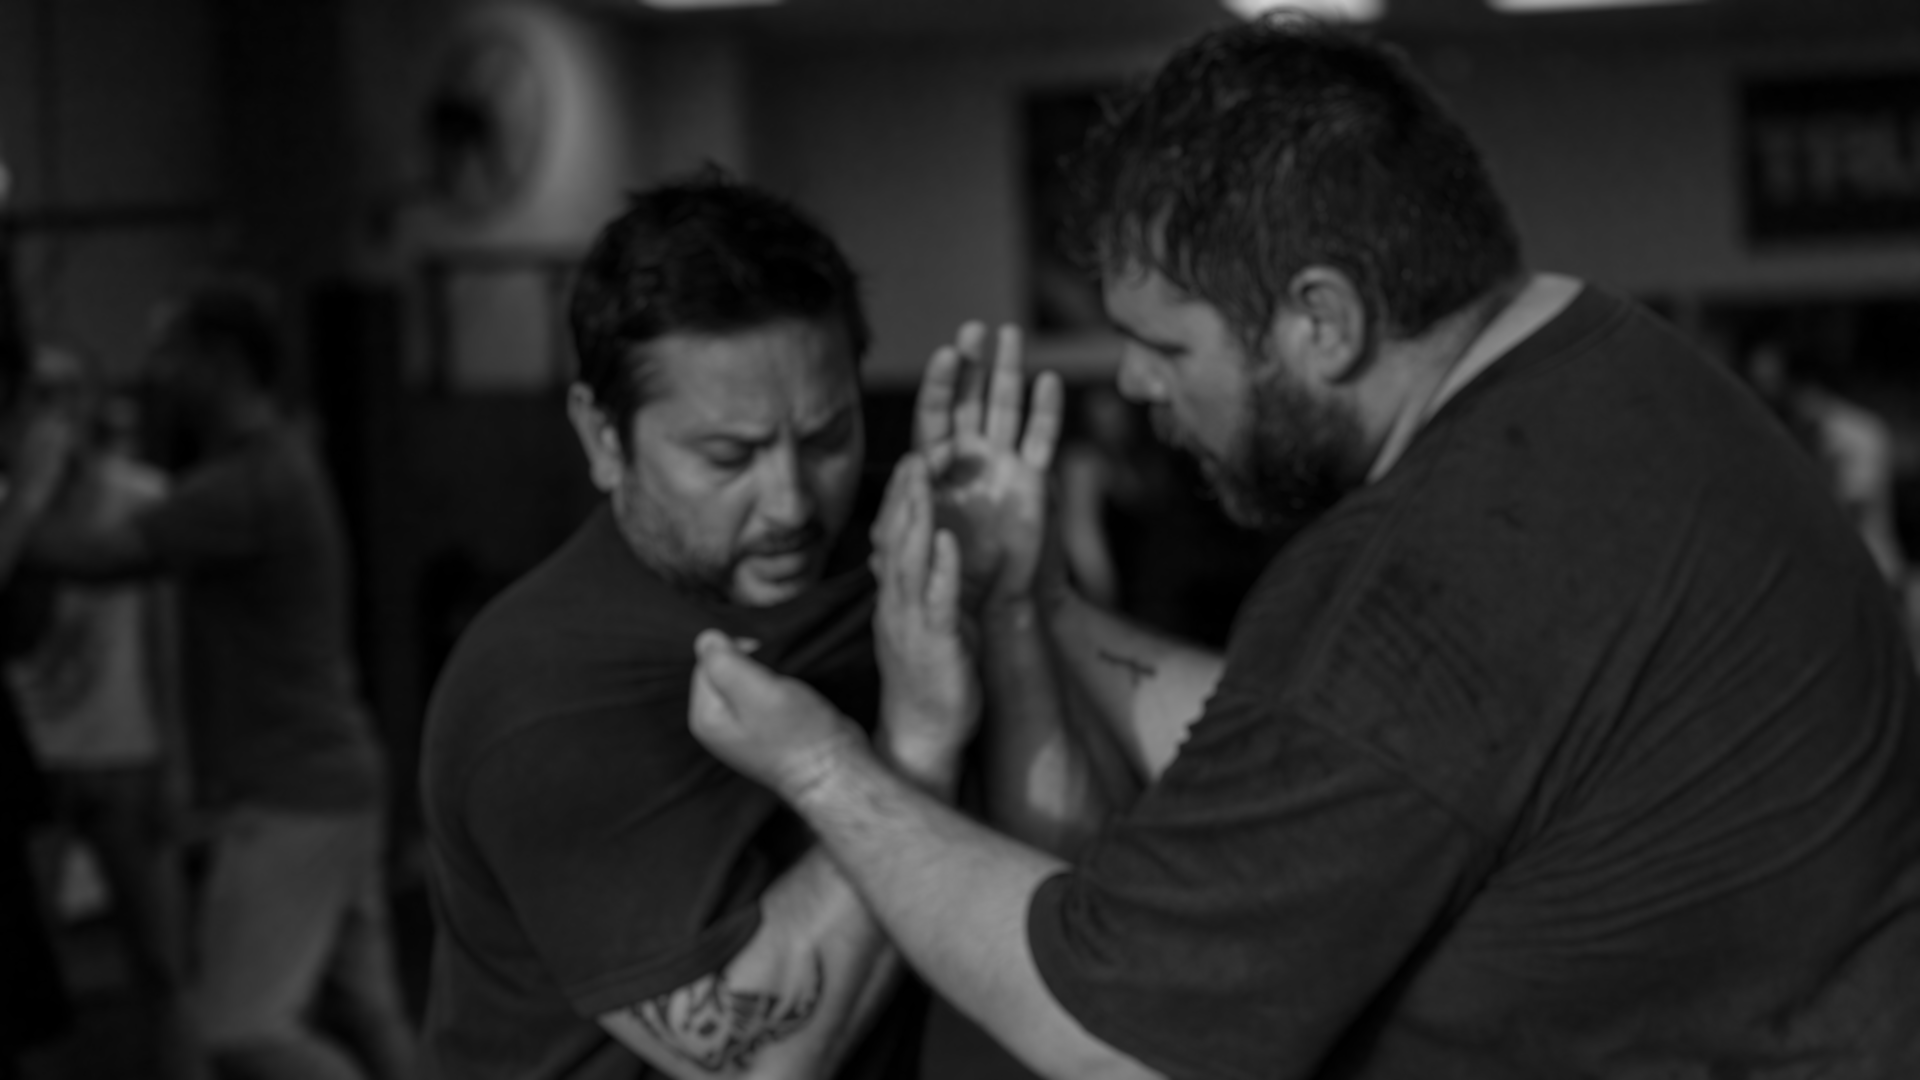 Two men training hand-to-hand combat